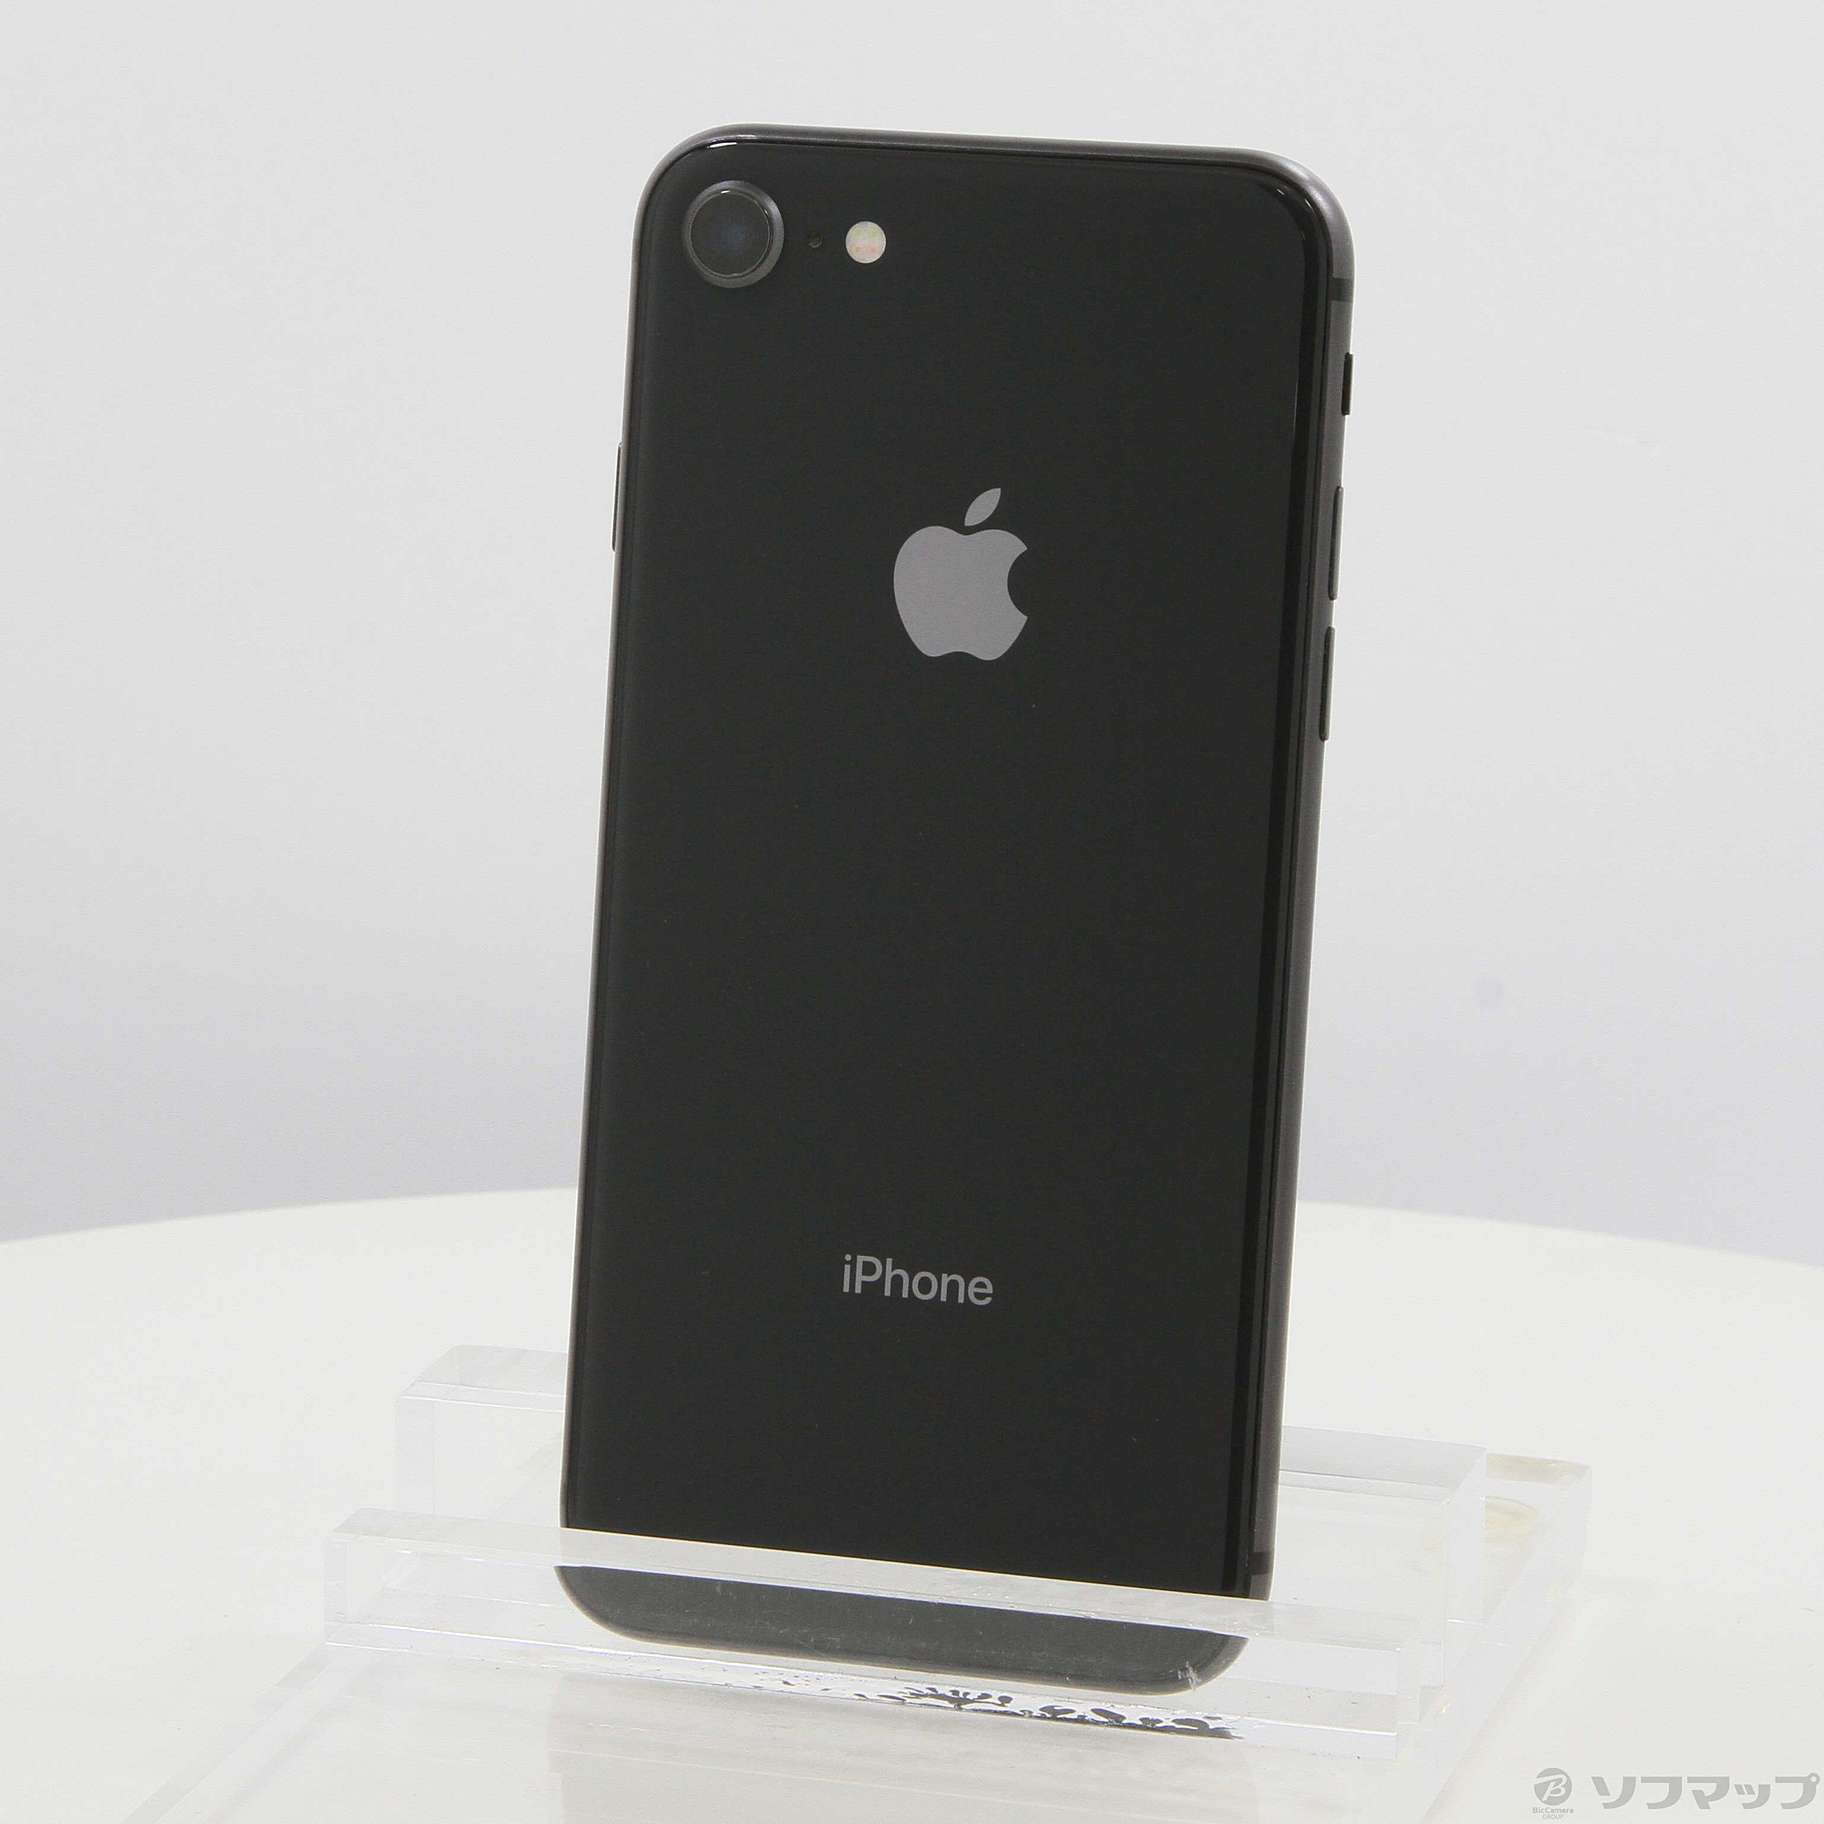 iPhone 8 スペースグレイ 256 GB SIMフリー - スマートフォン本体